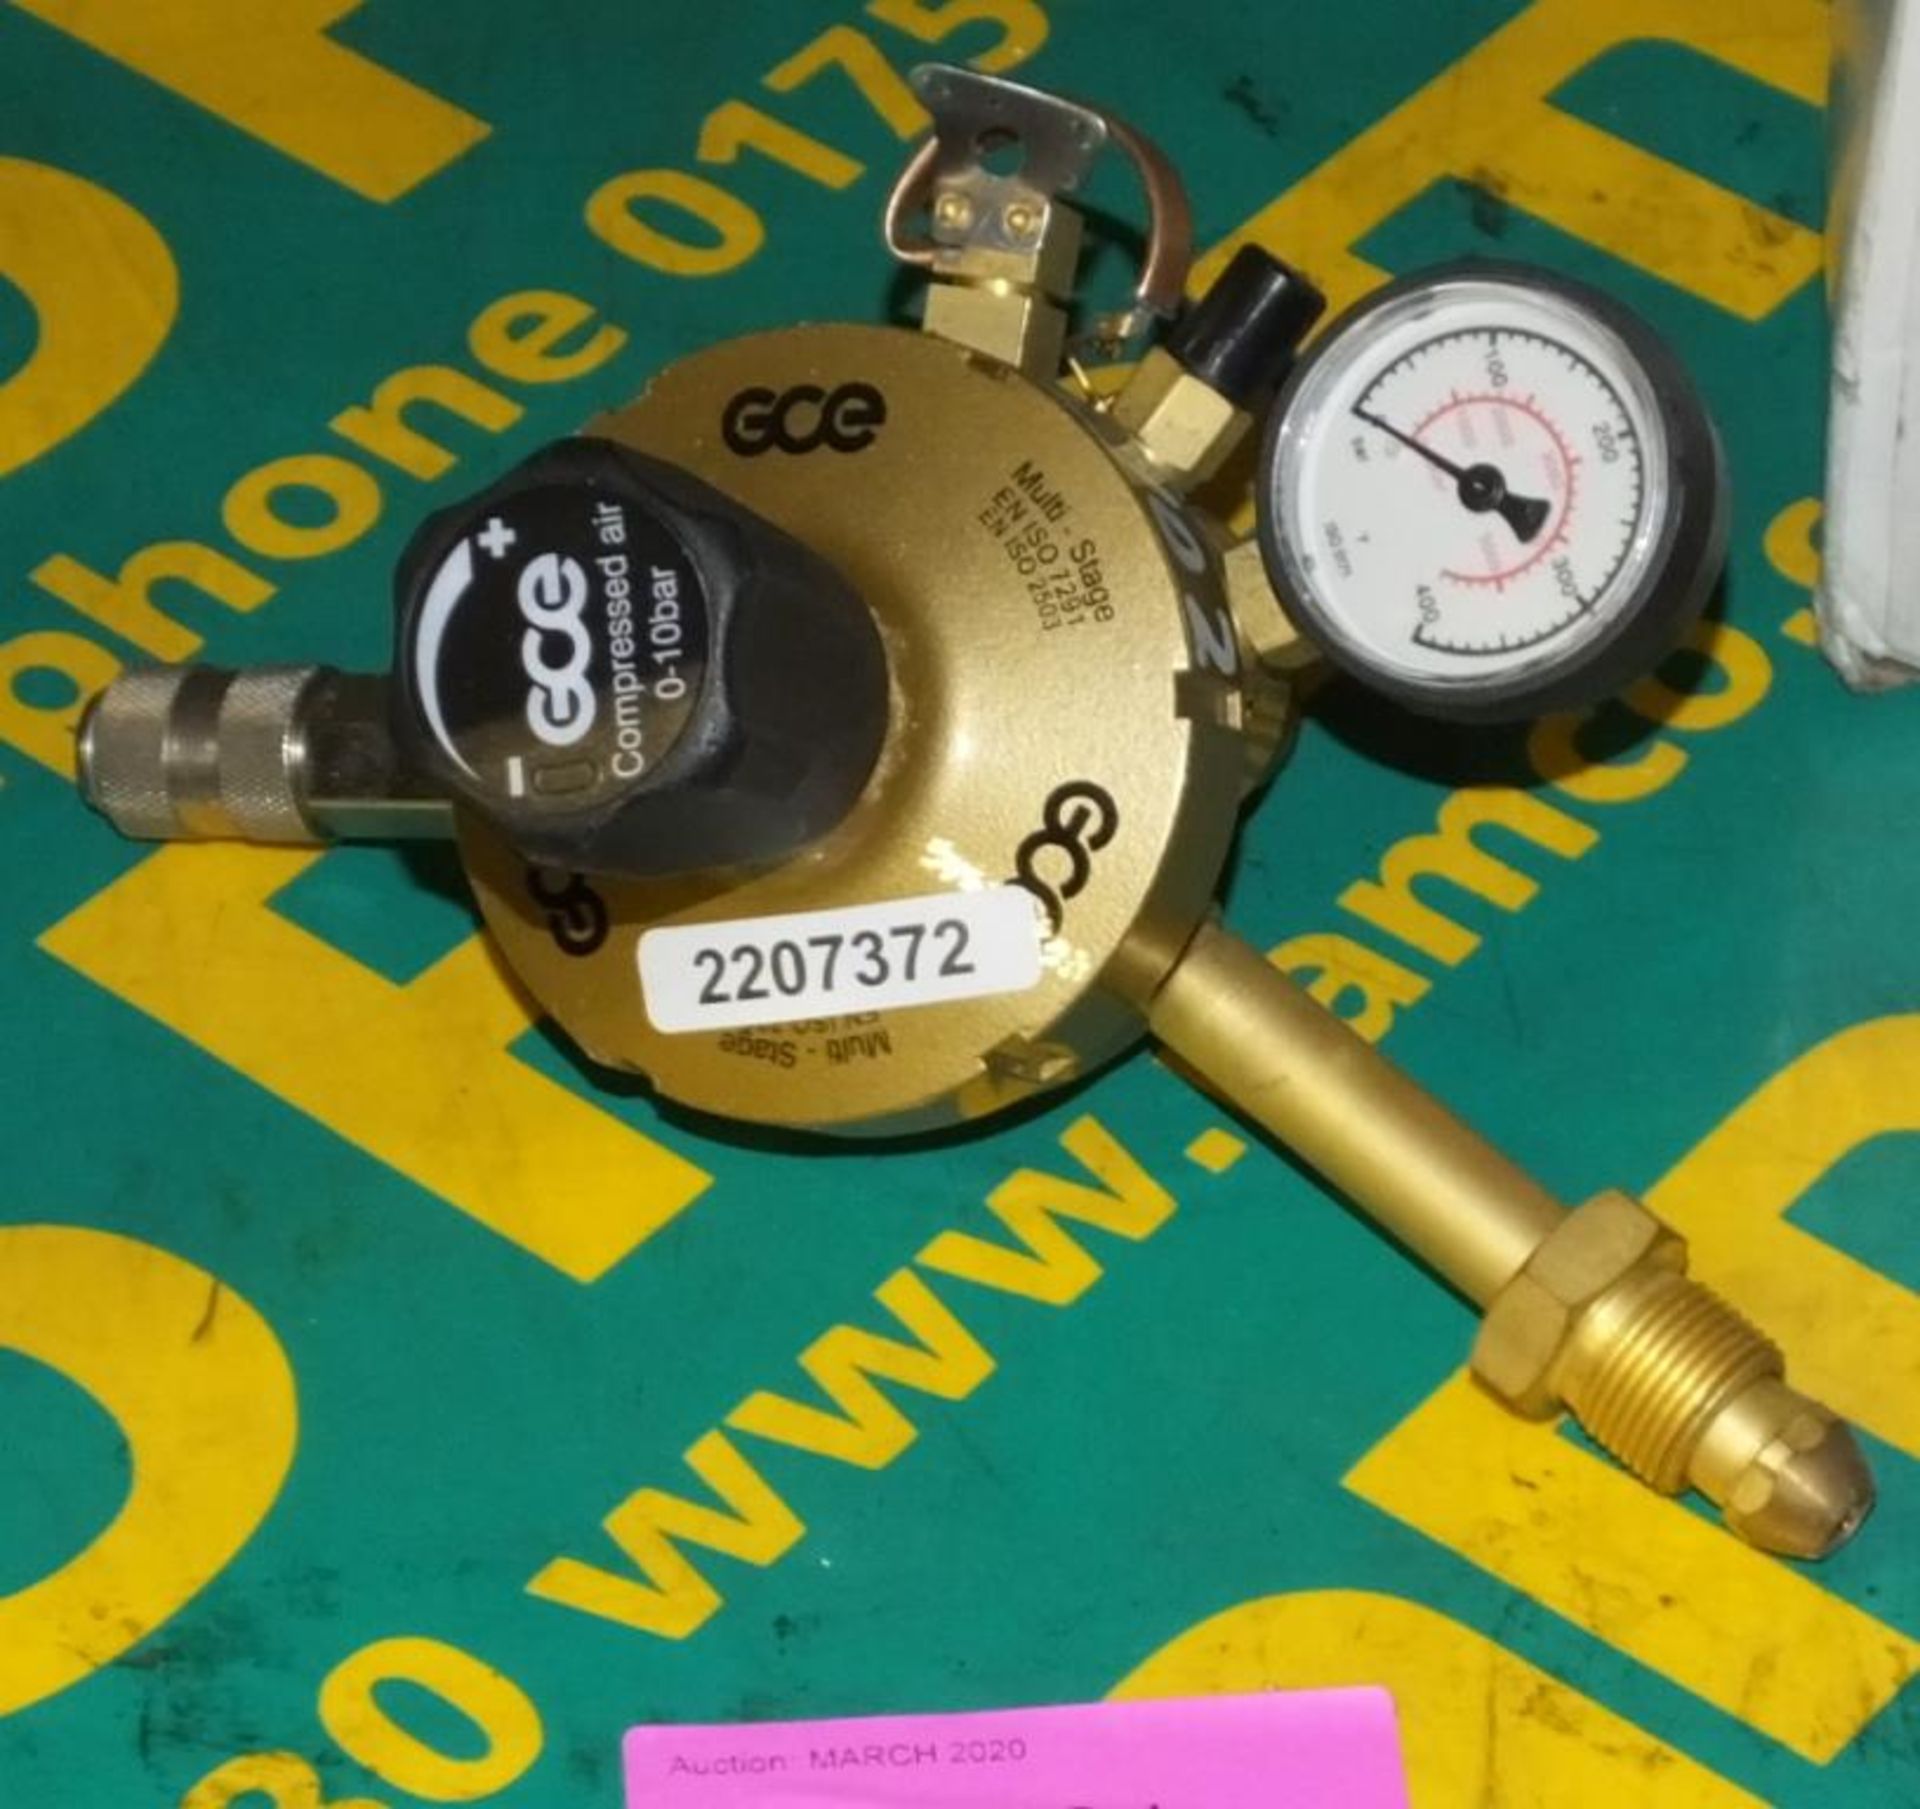 Gas Regulator - GCE 0-10 bar